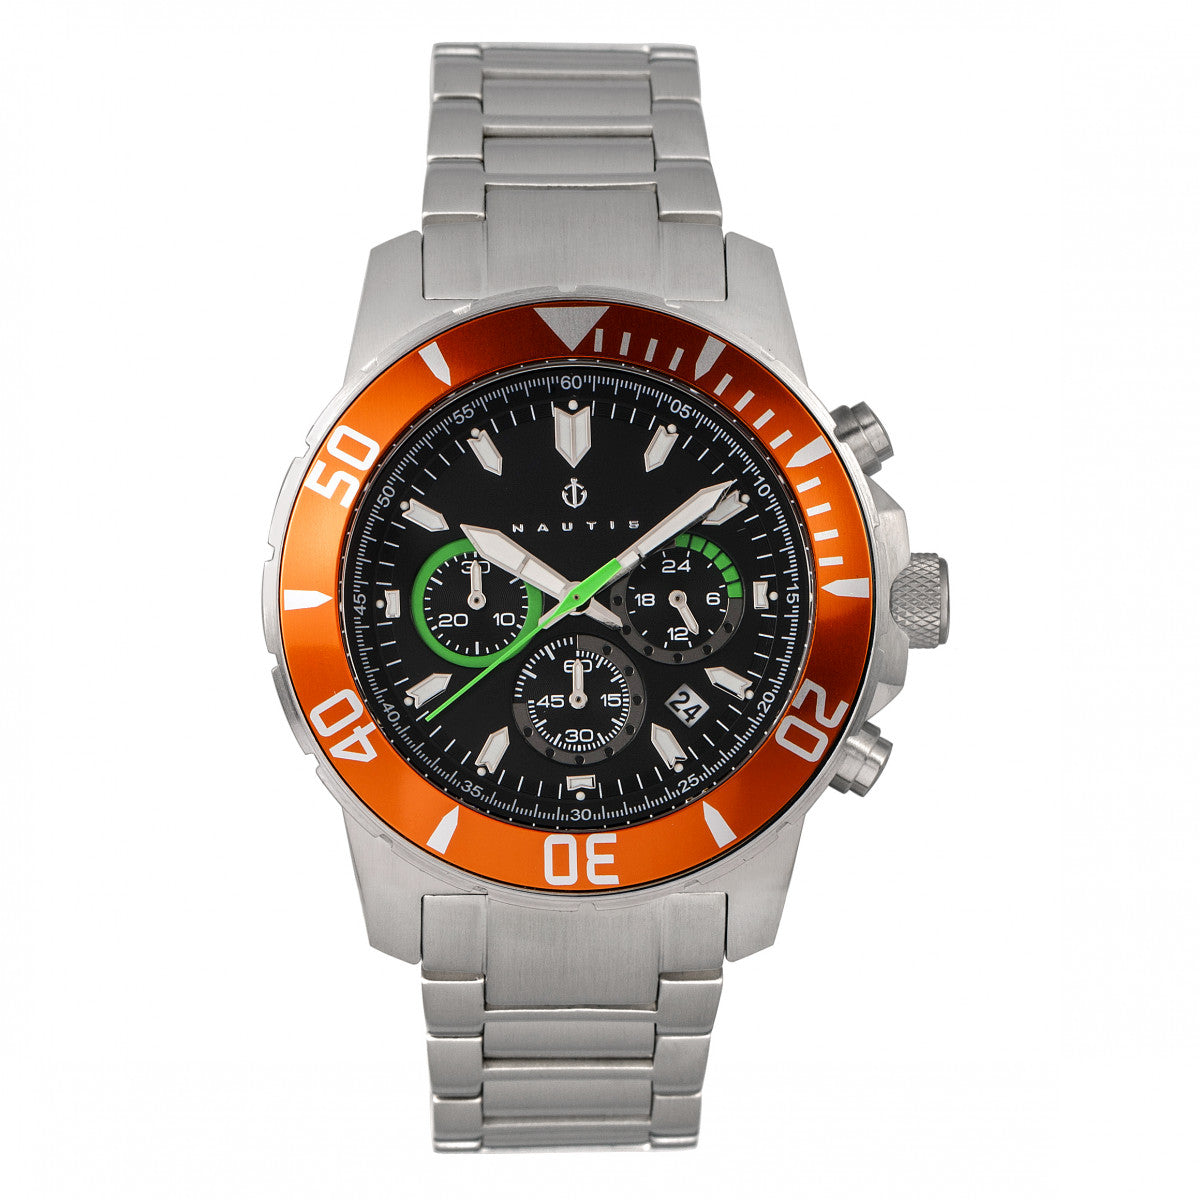 Nautis Dive Chrono 500 Chronograph Bracelet Watch - Orange/Black - 17065-A